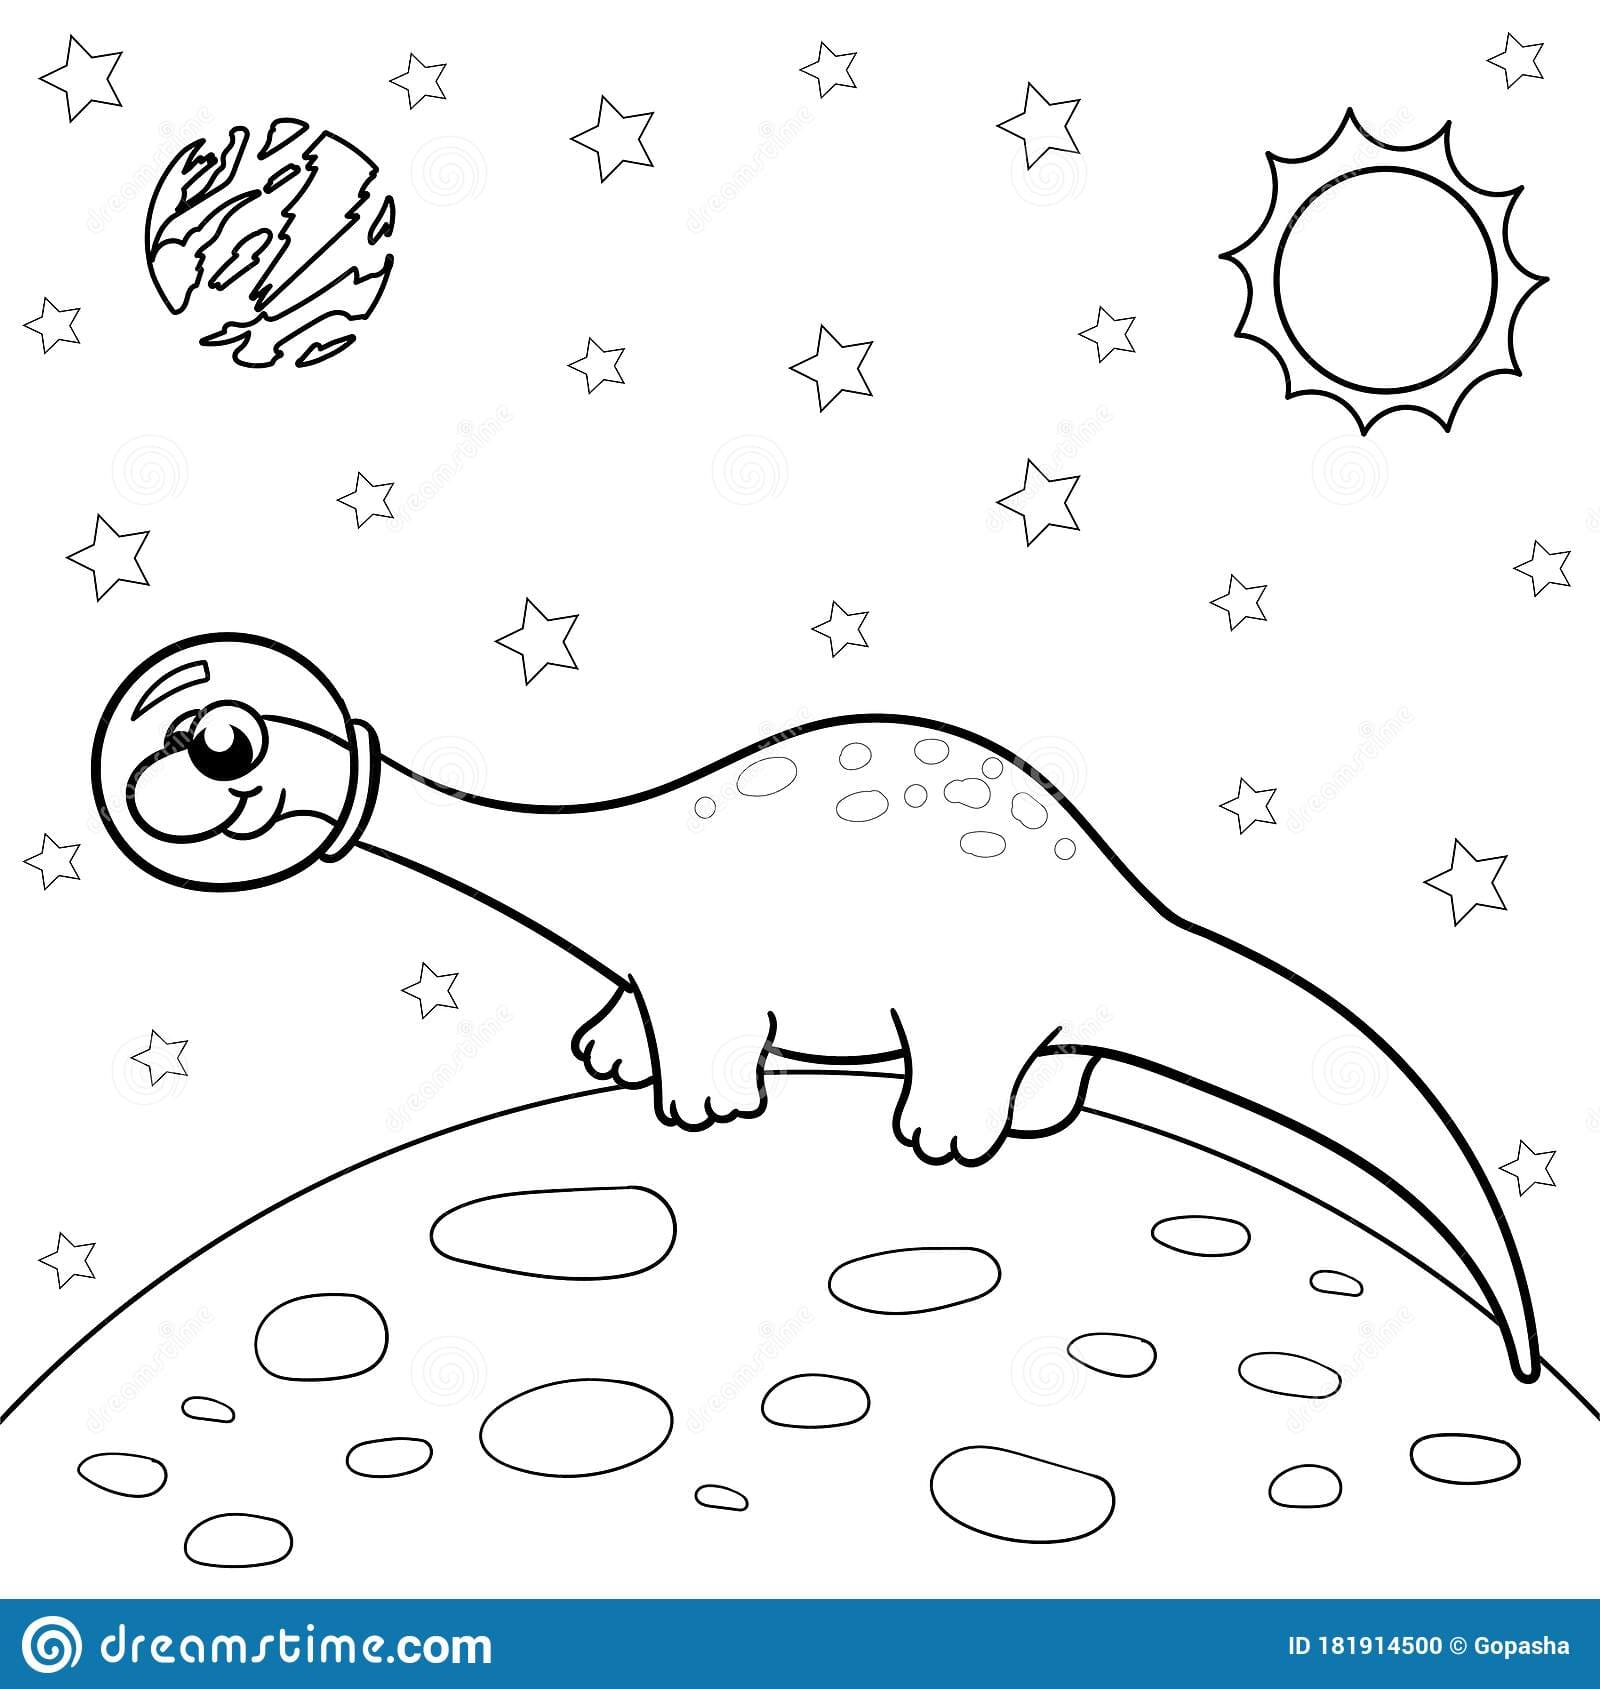 Vector illustration of dinosaur astronaut in space